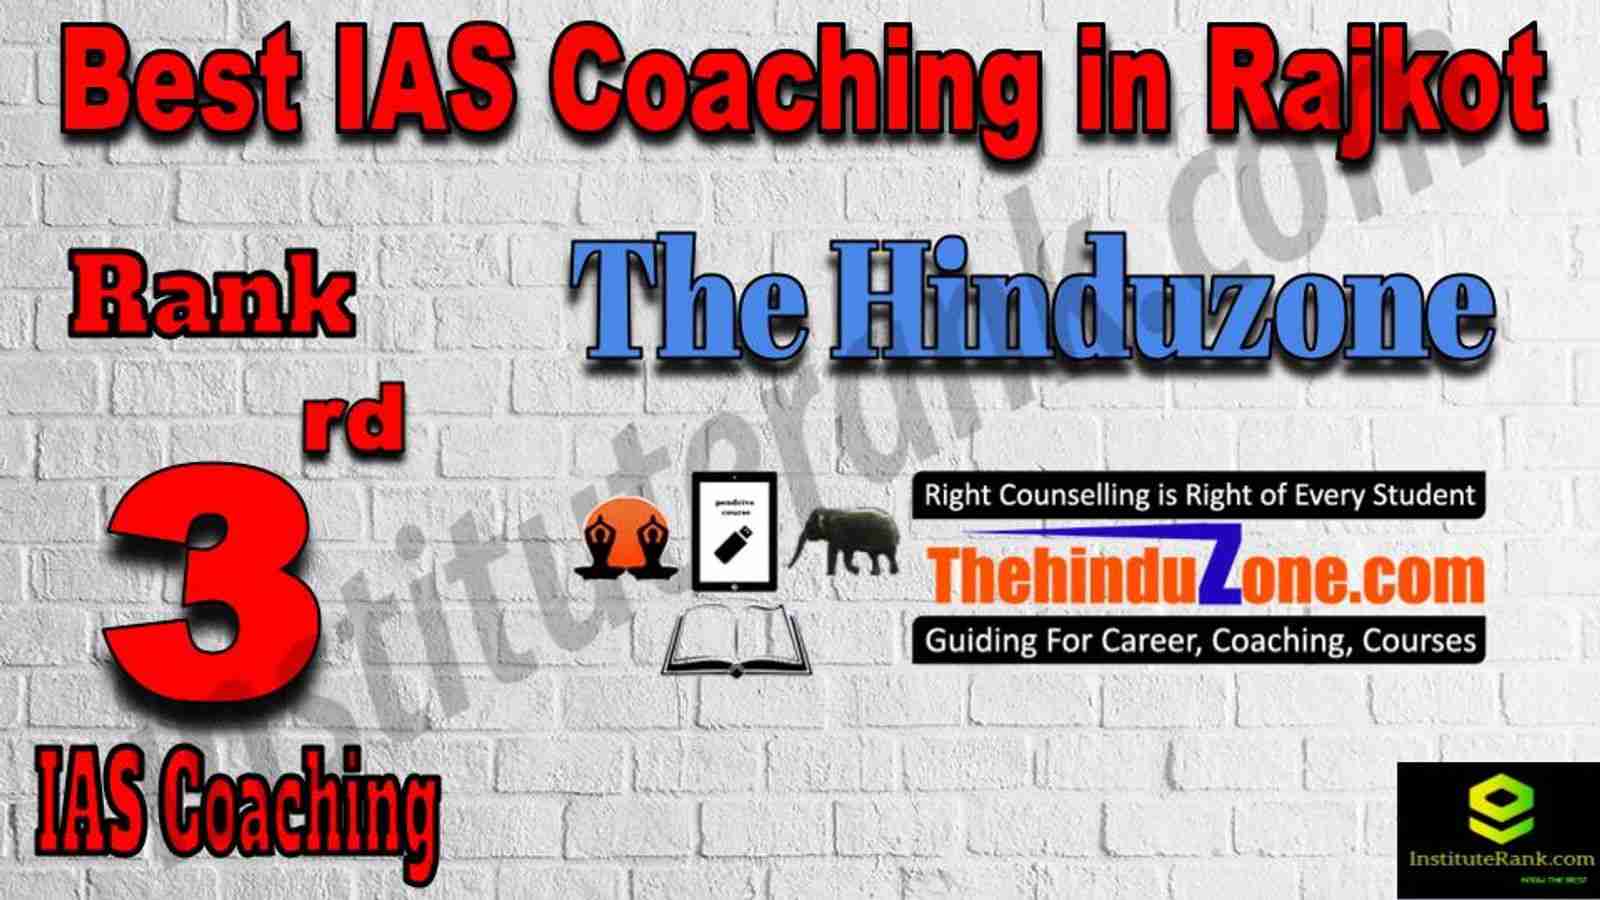 3rd Best IAS Coaching in Rajkot